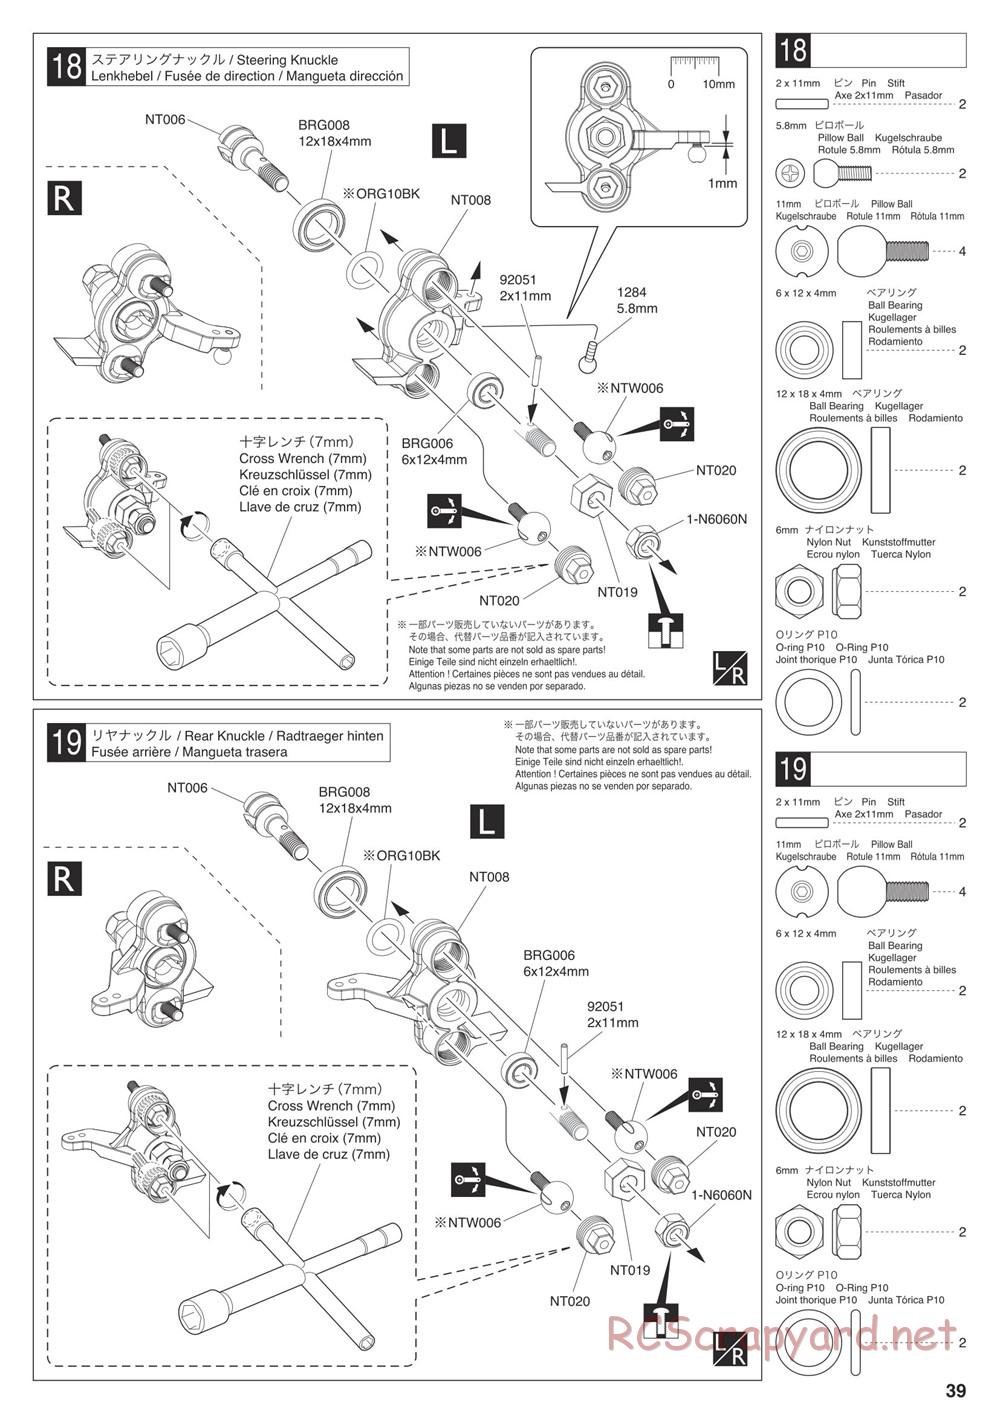 Kyosho - Nitro Tracker (2019) - Manual - Page 39